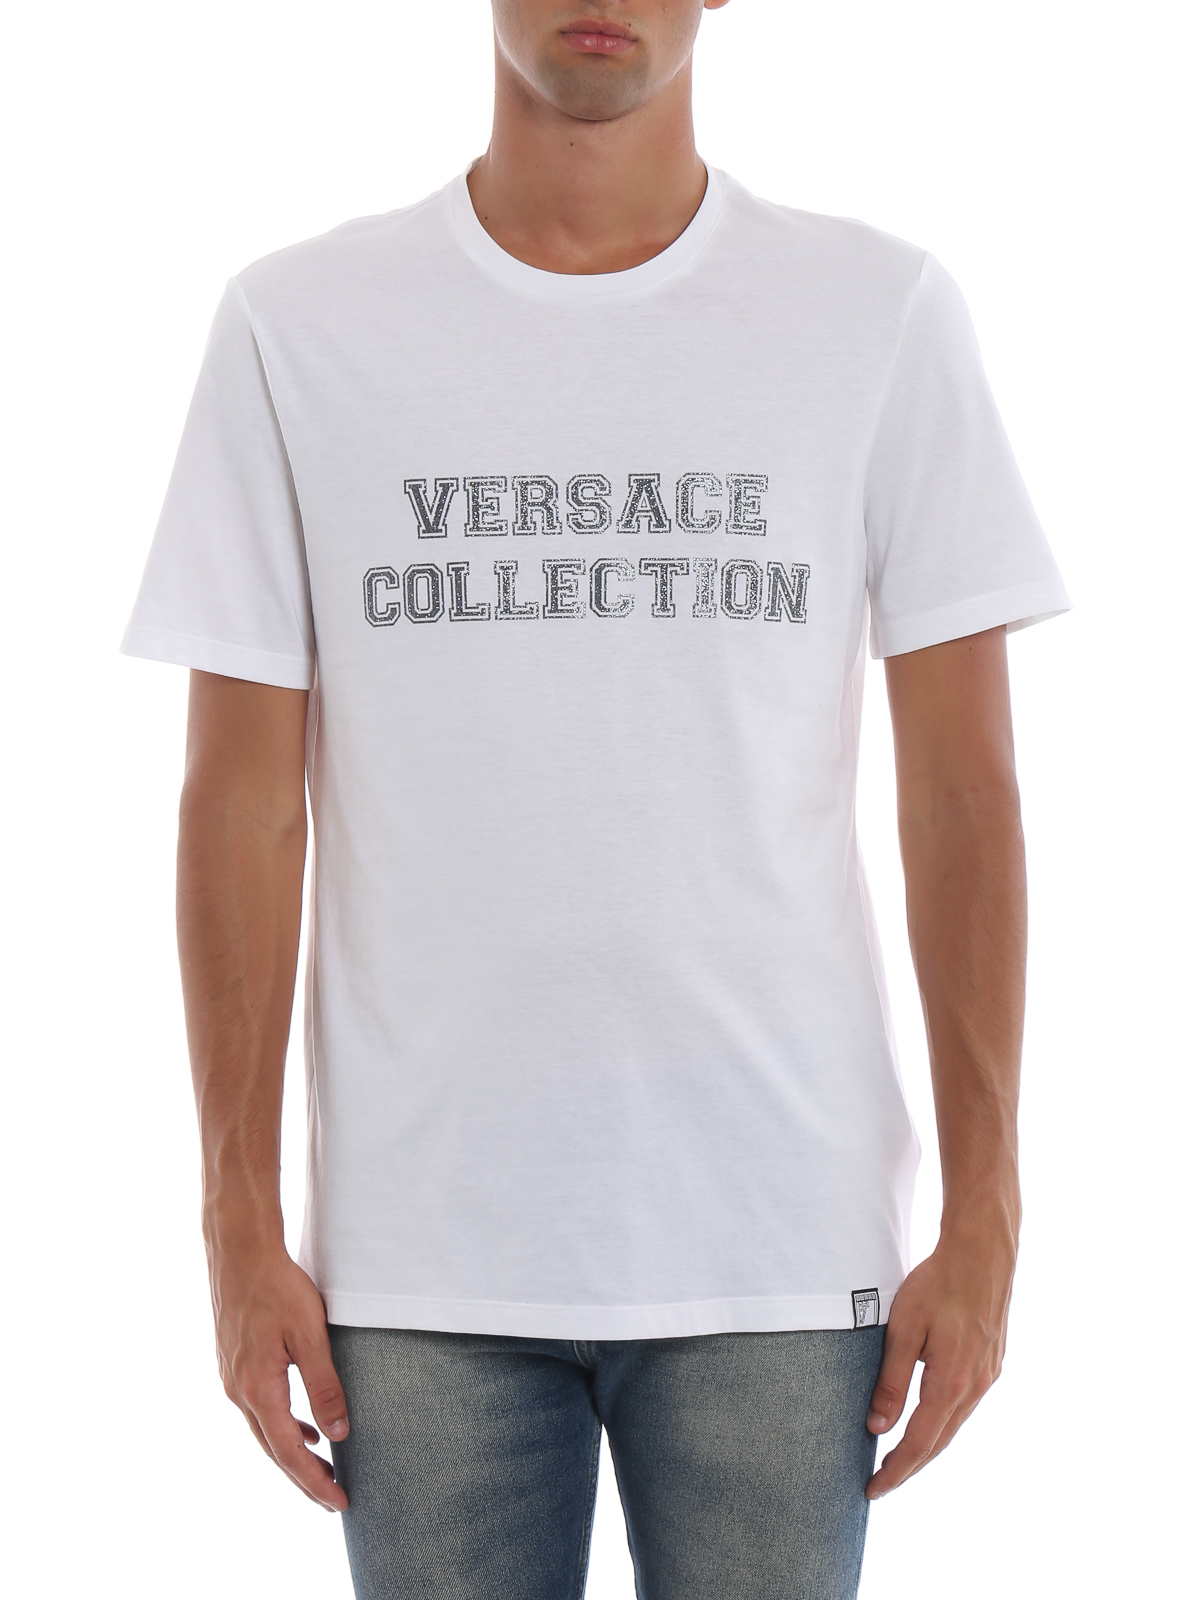 LF collection футболка мужская. Футболка Версаче оригинал. B C collection футболка.